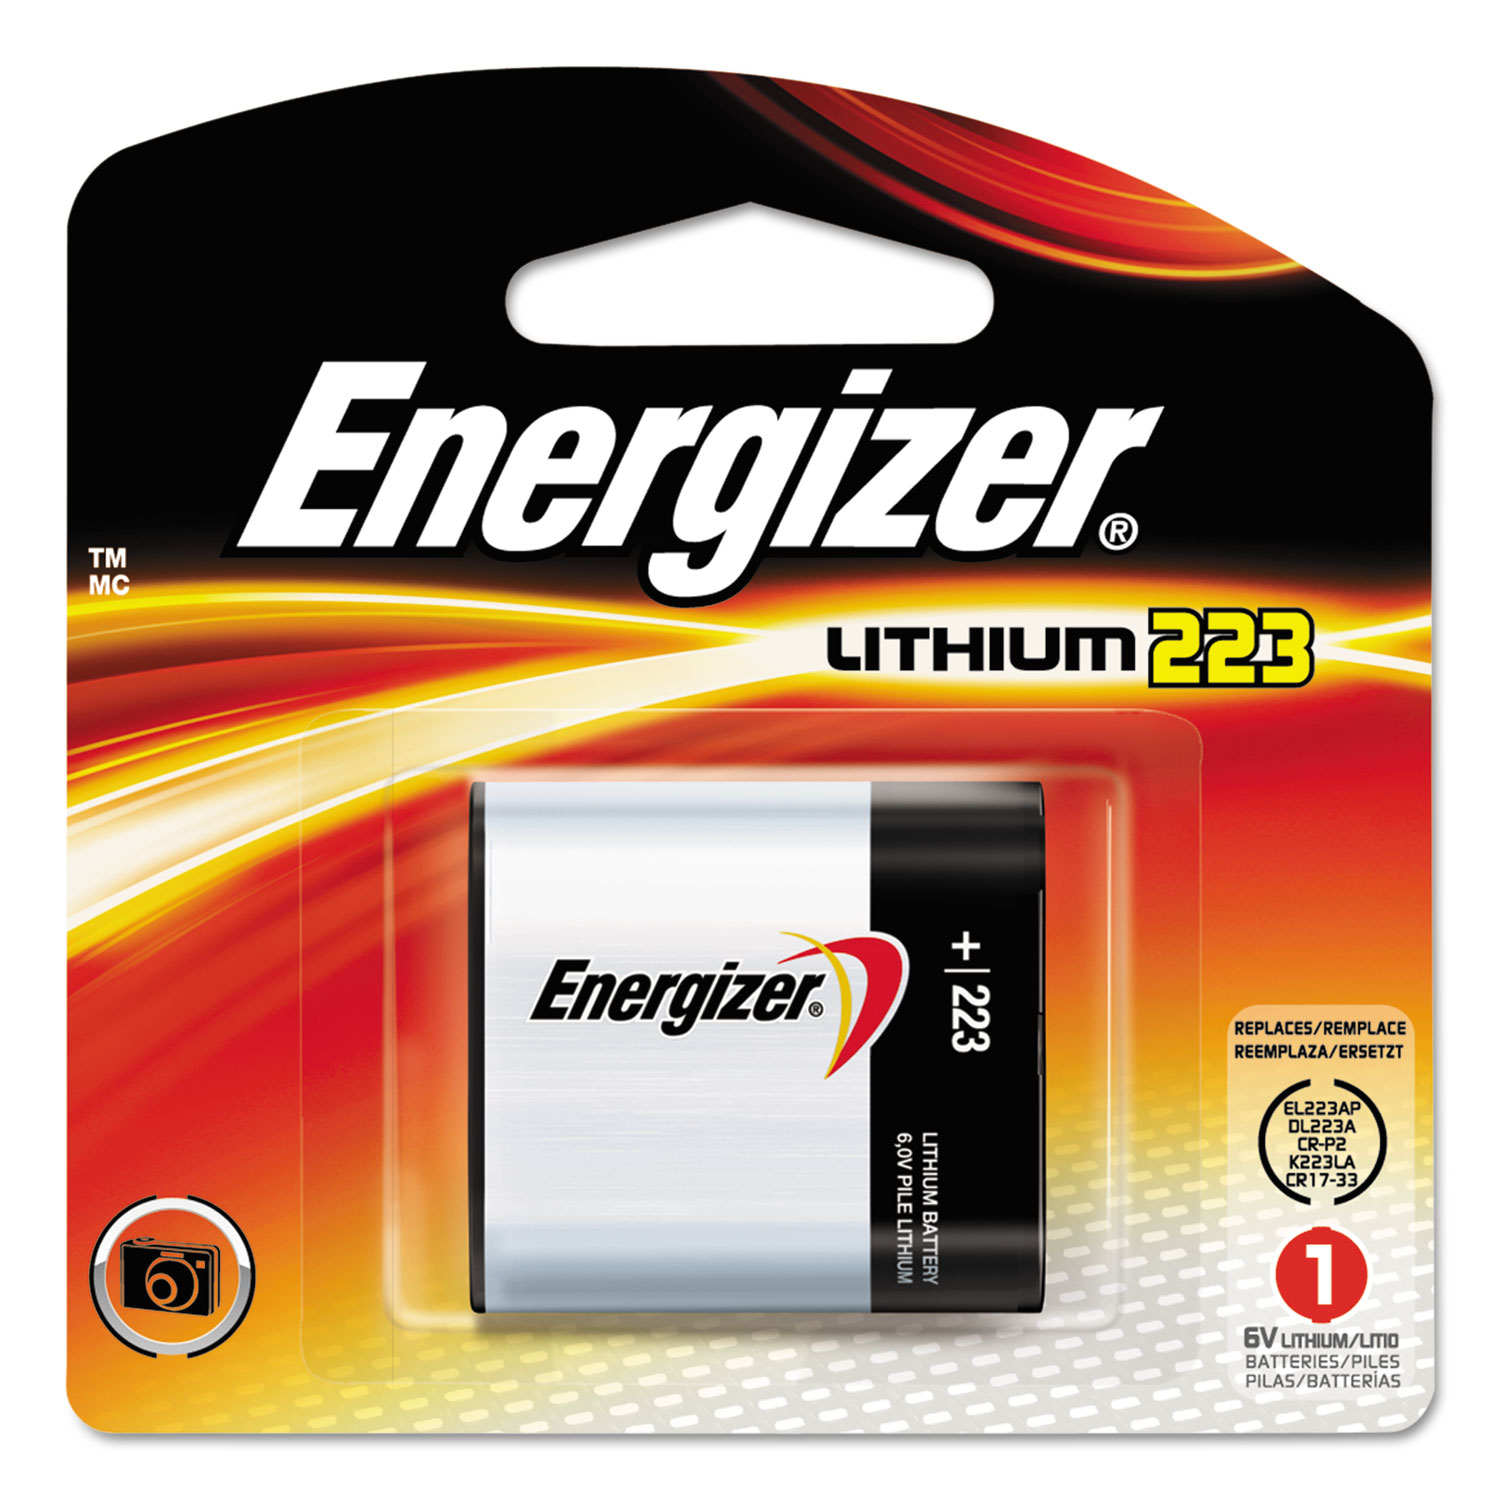  Energizer EL223APBP 223 Lithium Photo Battery, 6V (EVEEL223APBP) 